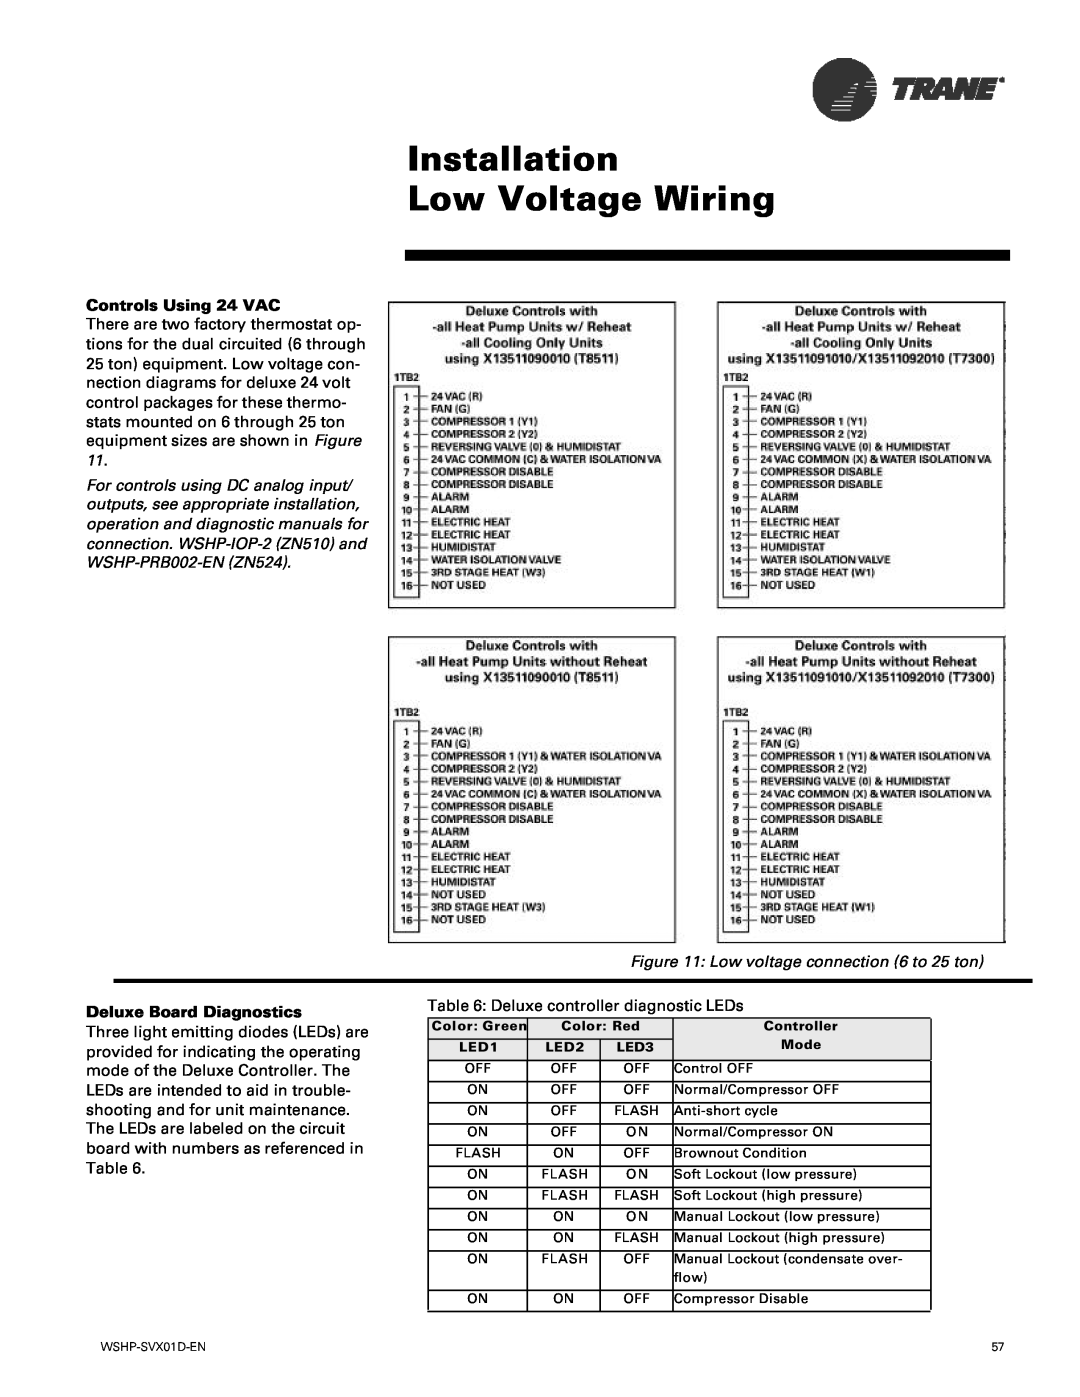 Trane GEV, GEH manual Installation Low Voltage Wiring, Controls Using 24 VAC, Deluxe Board Diagnostics 